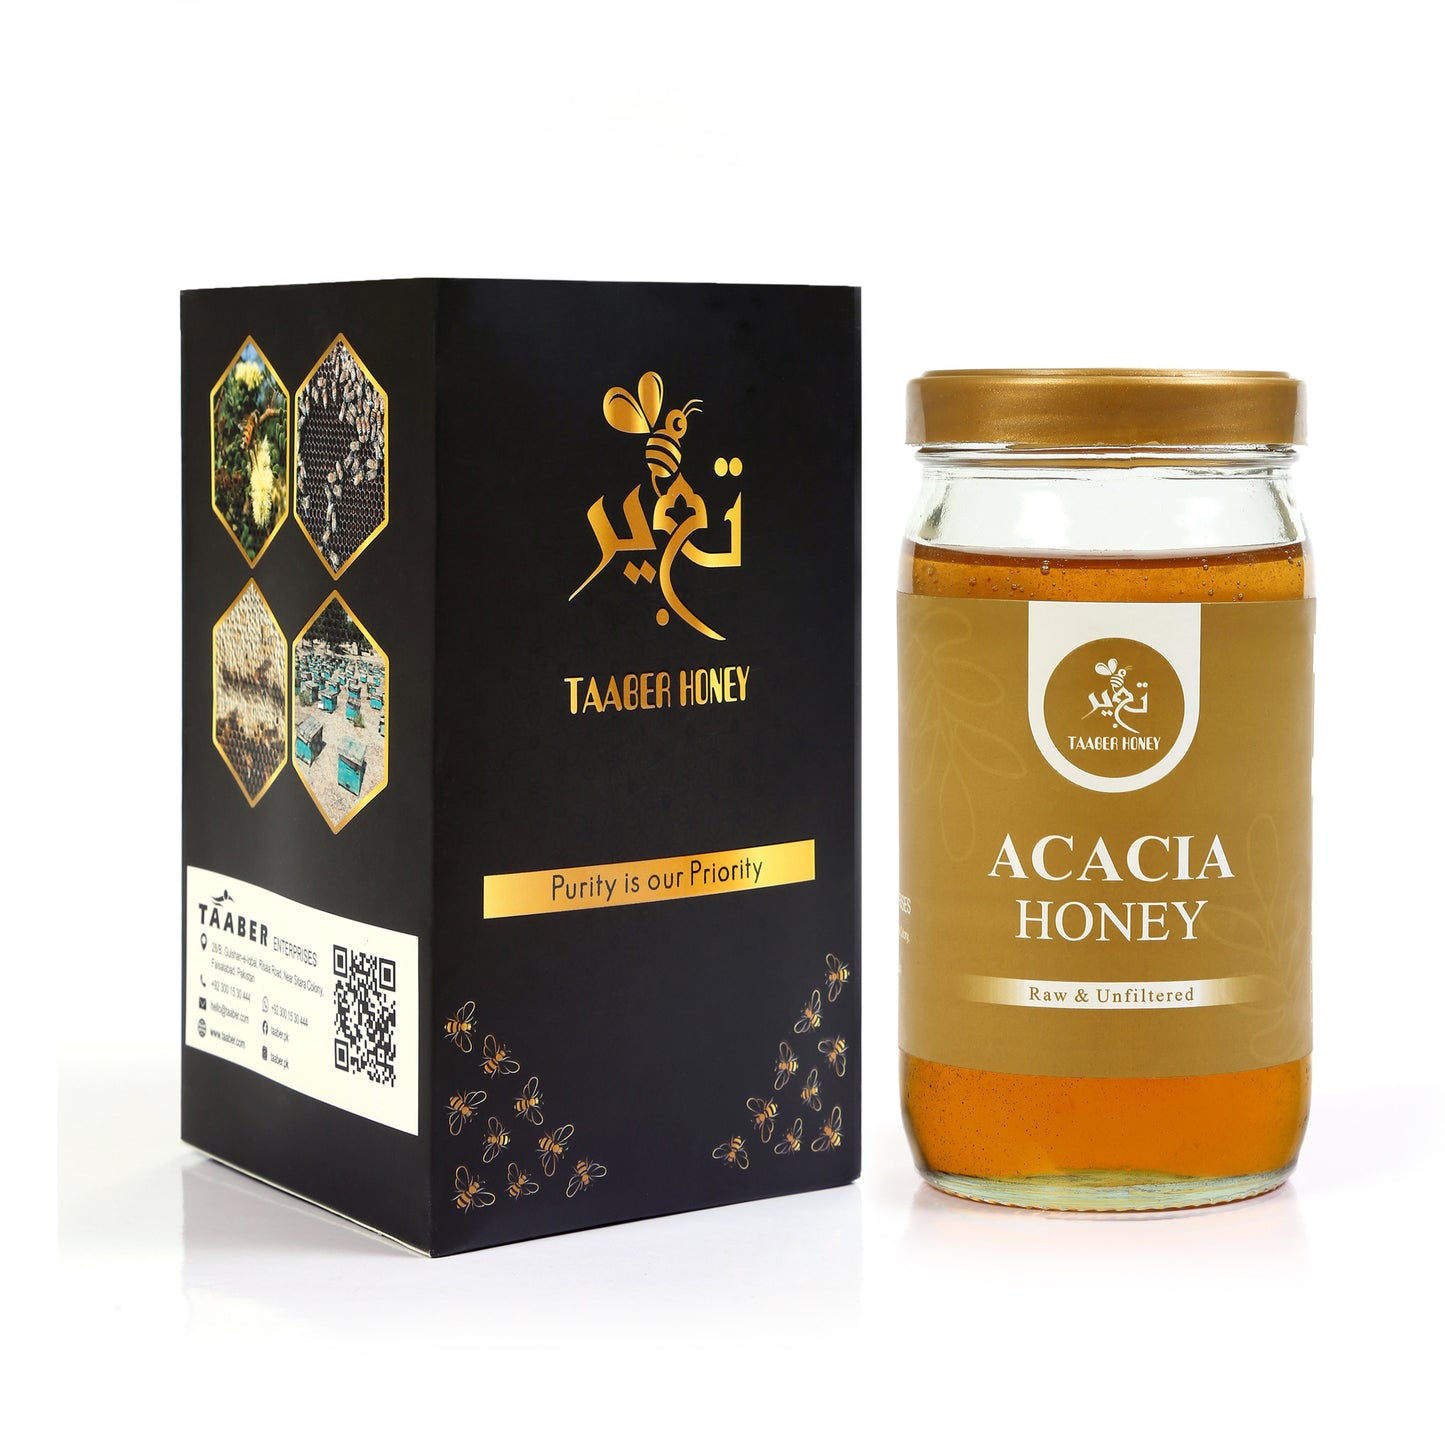 Acacia (Phulai) Honey